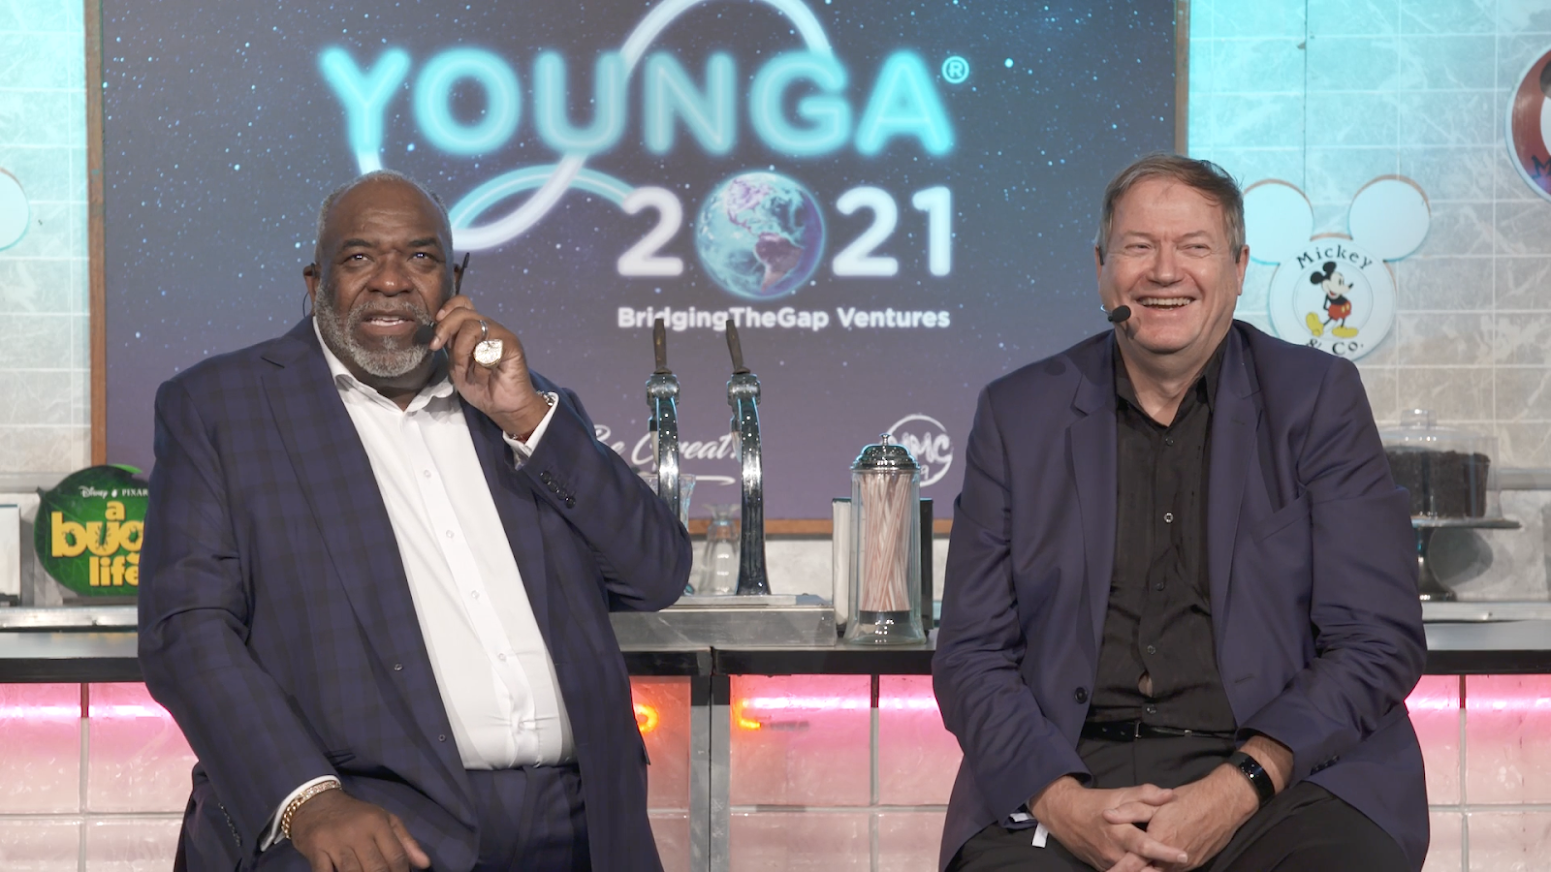 Hosts at Younga 2021 Disney panel